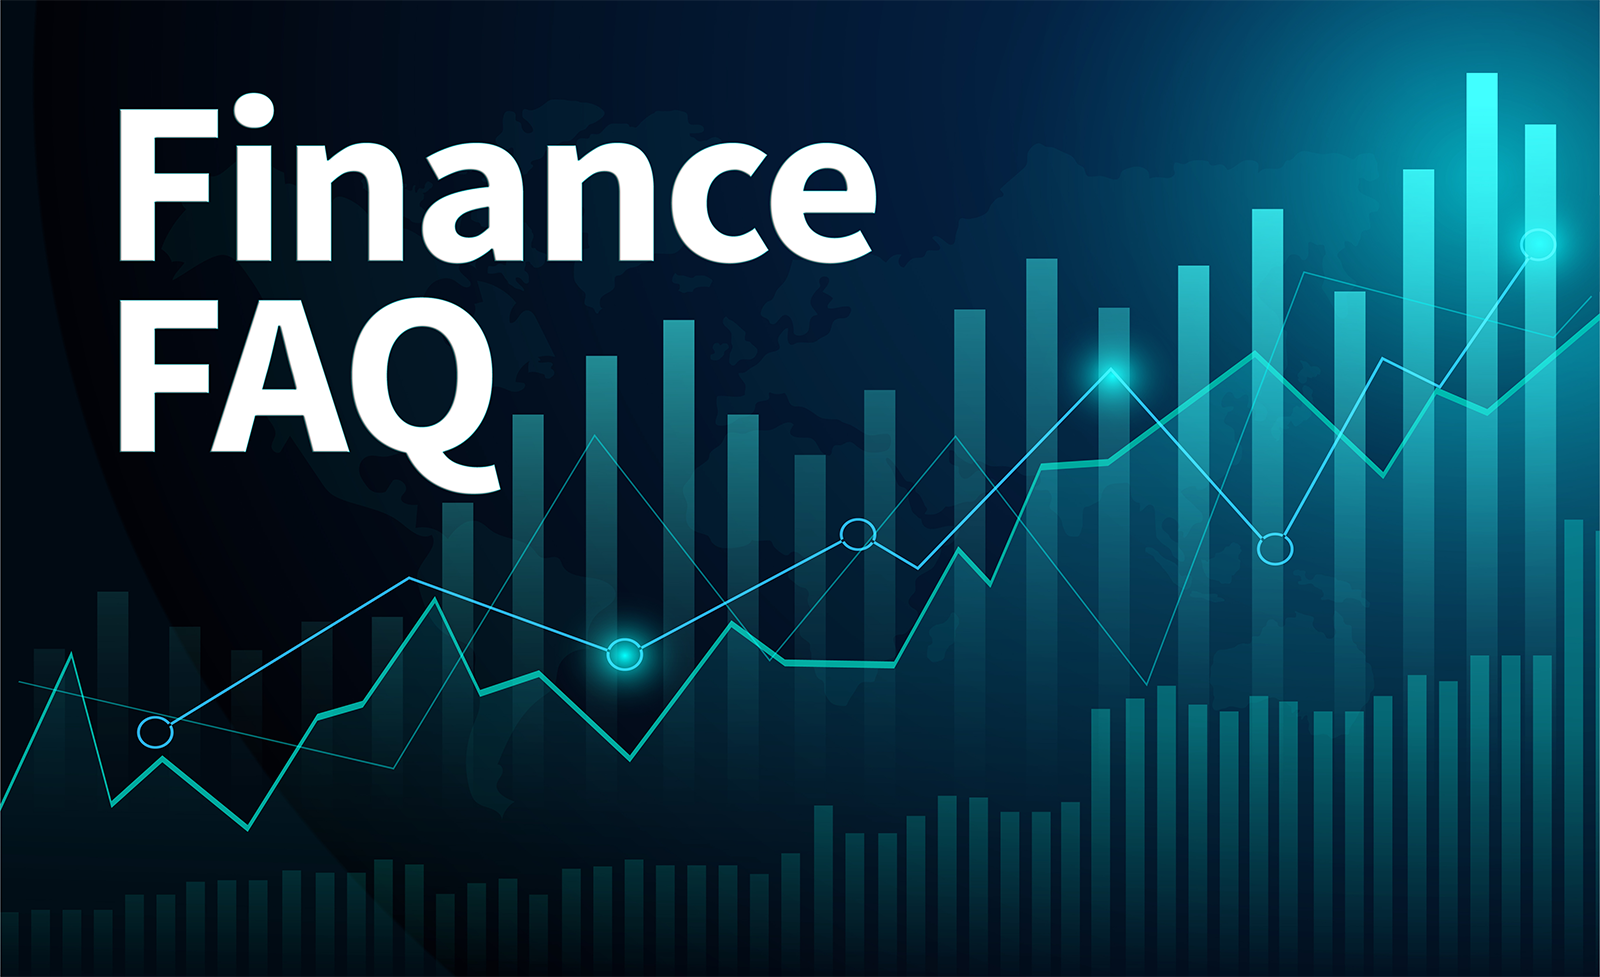 Finance FAQ- A digital image of a bar graph